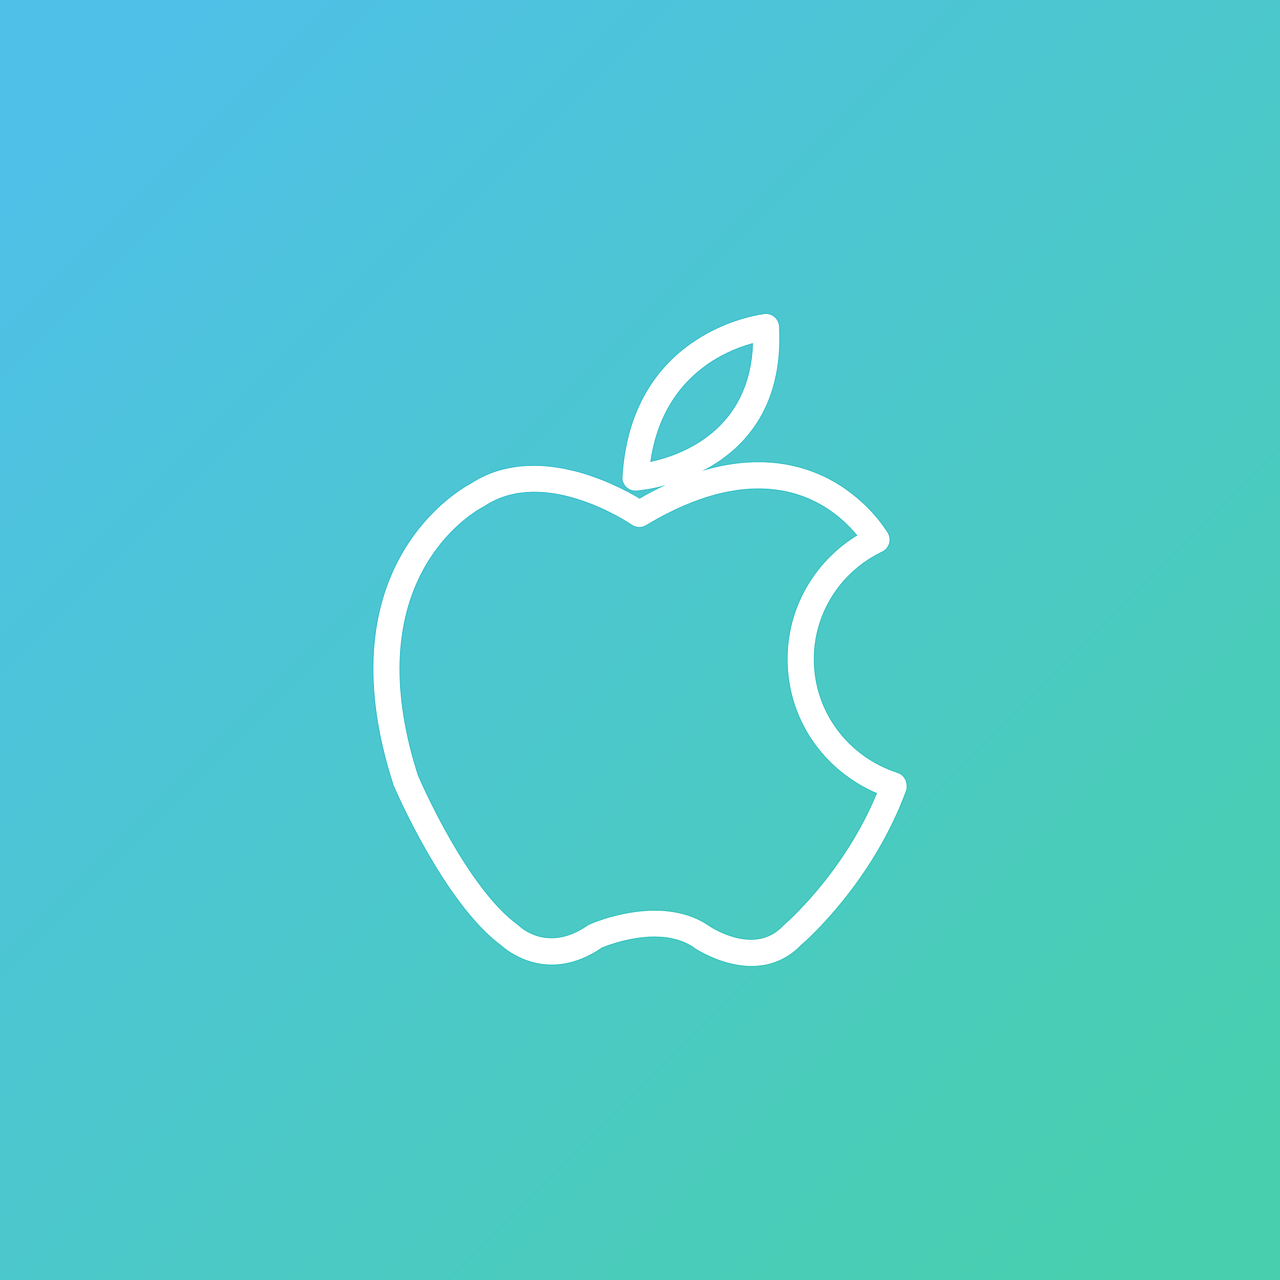 download-free-photo-of-apple-apple-icon-apple-logo-apple-symbol